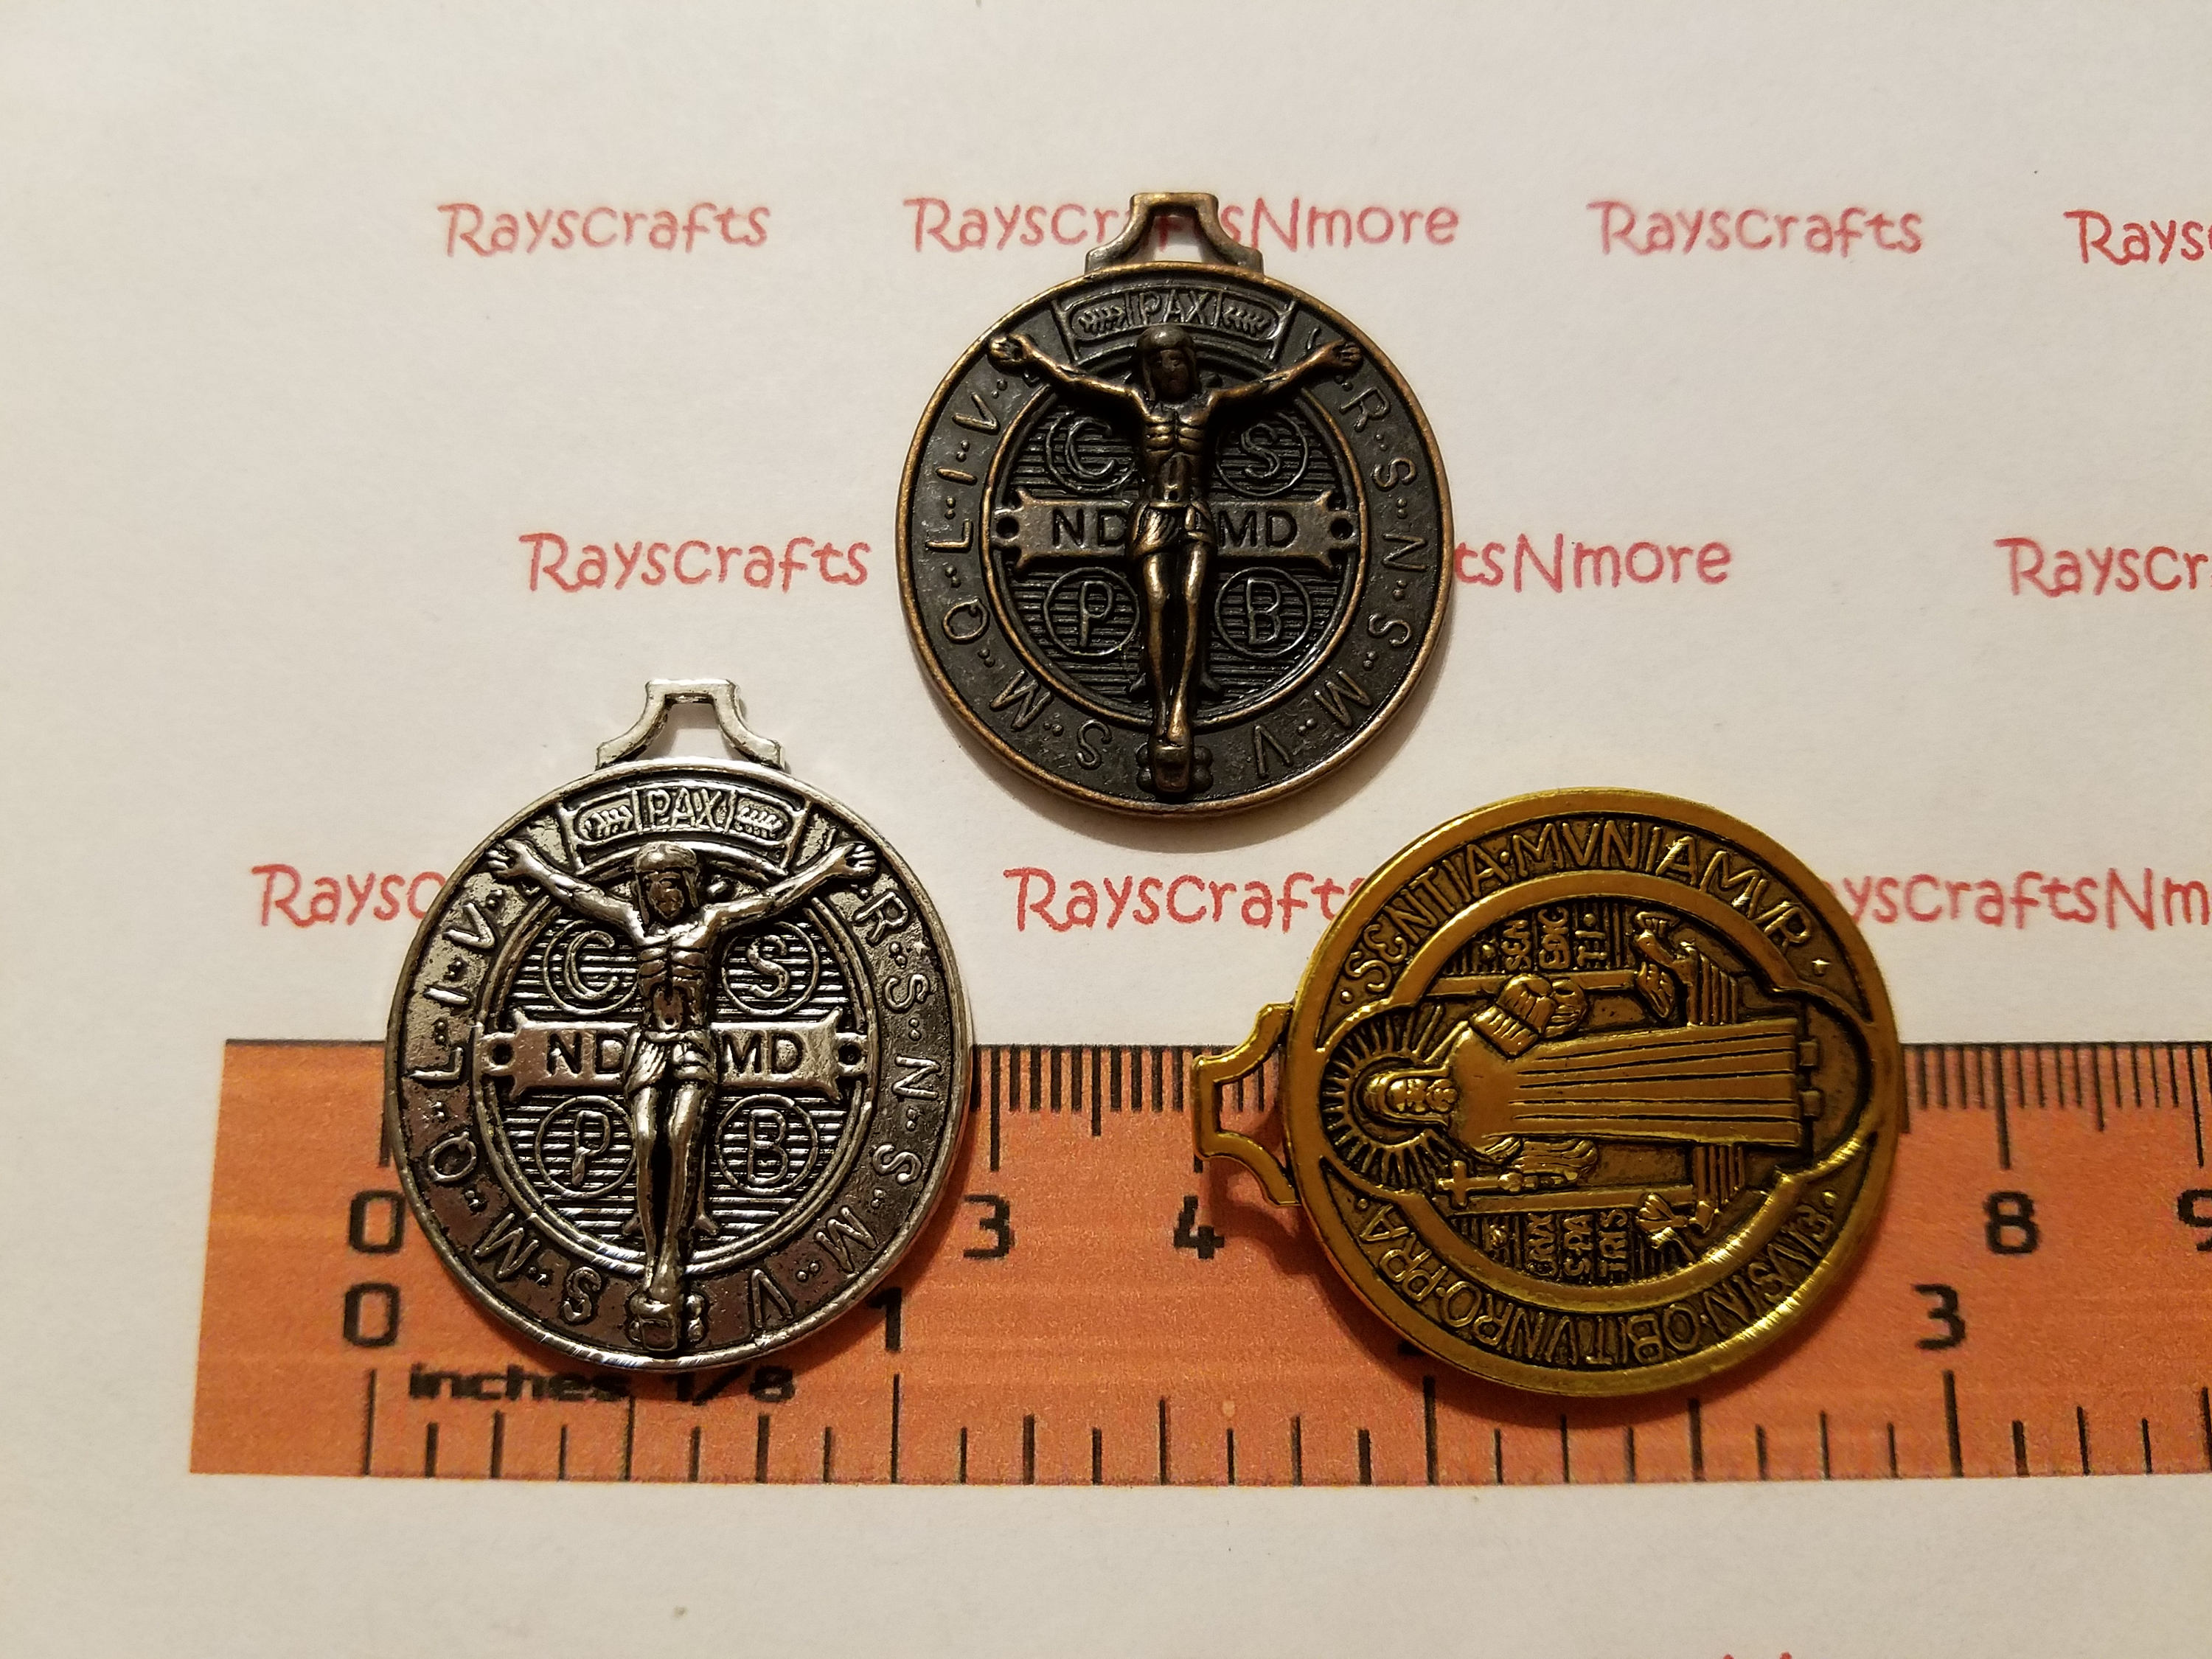 St Benedict medal Brass